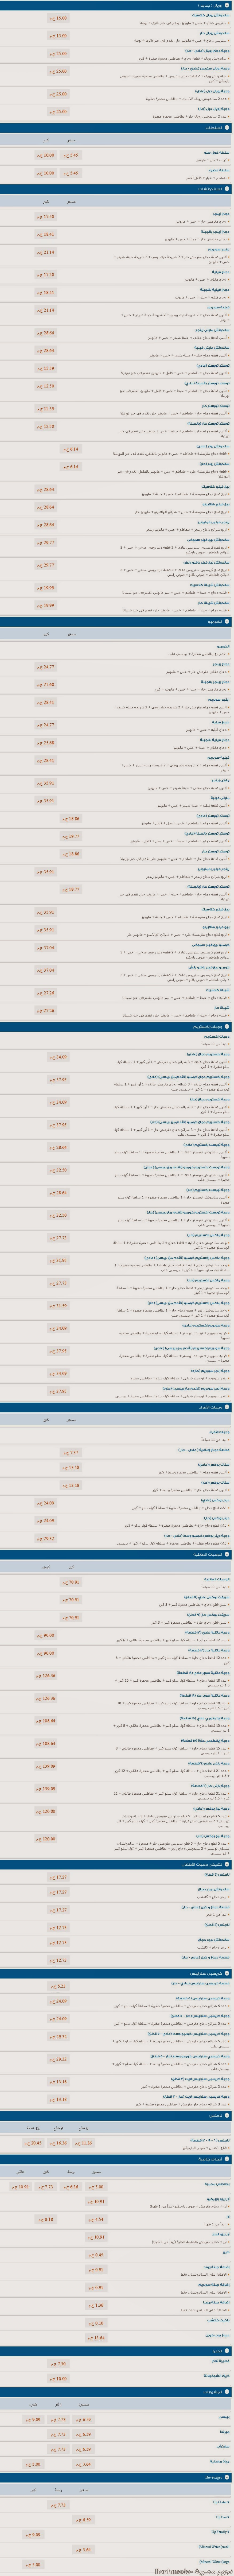 اسعار وجبات كنتاكي kfc في مصر فبراير 2014 , منيو مطاعم كنتاكي kfc 2014